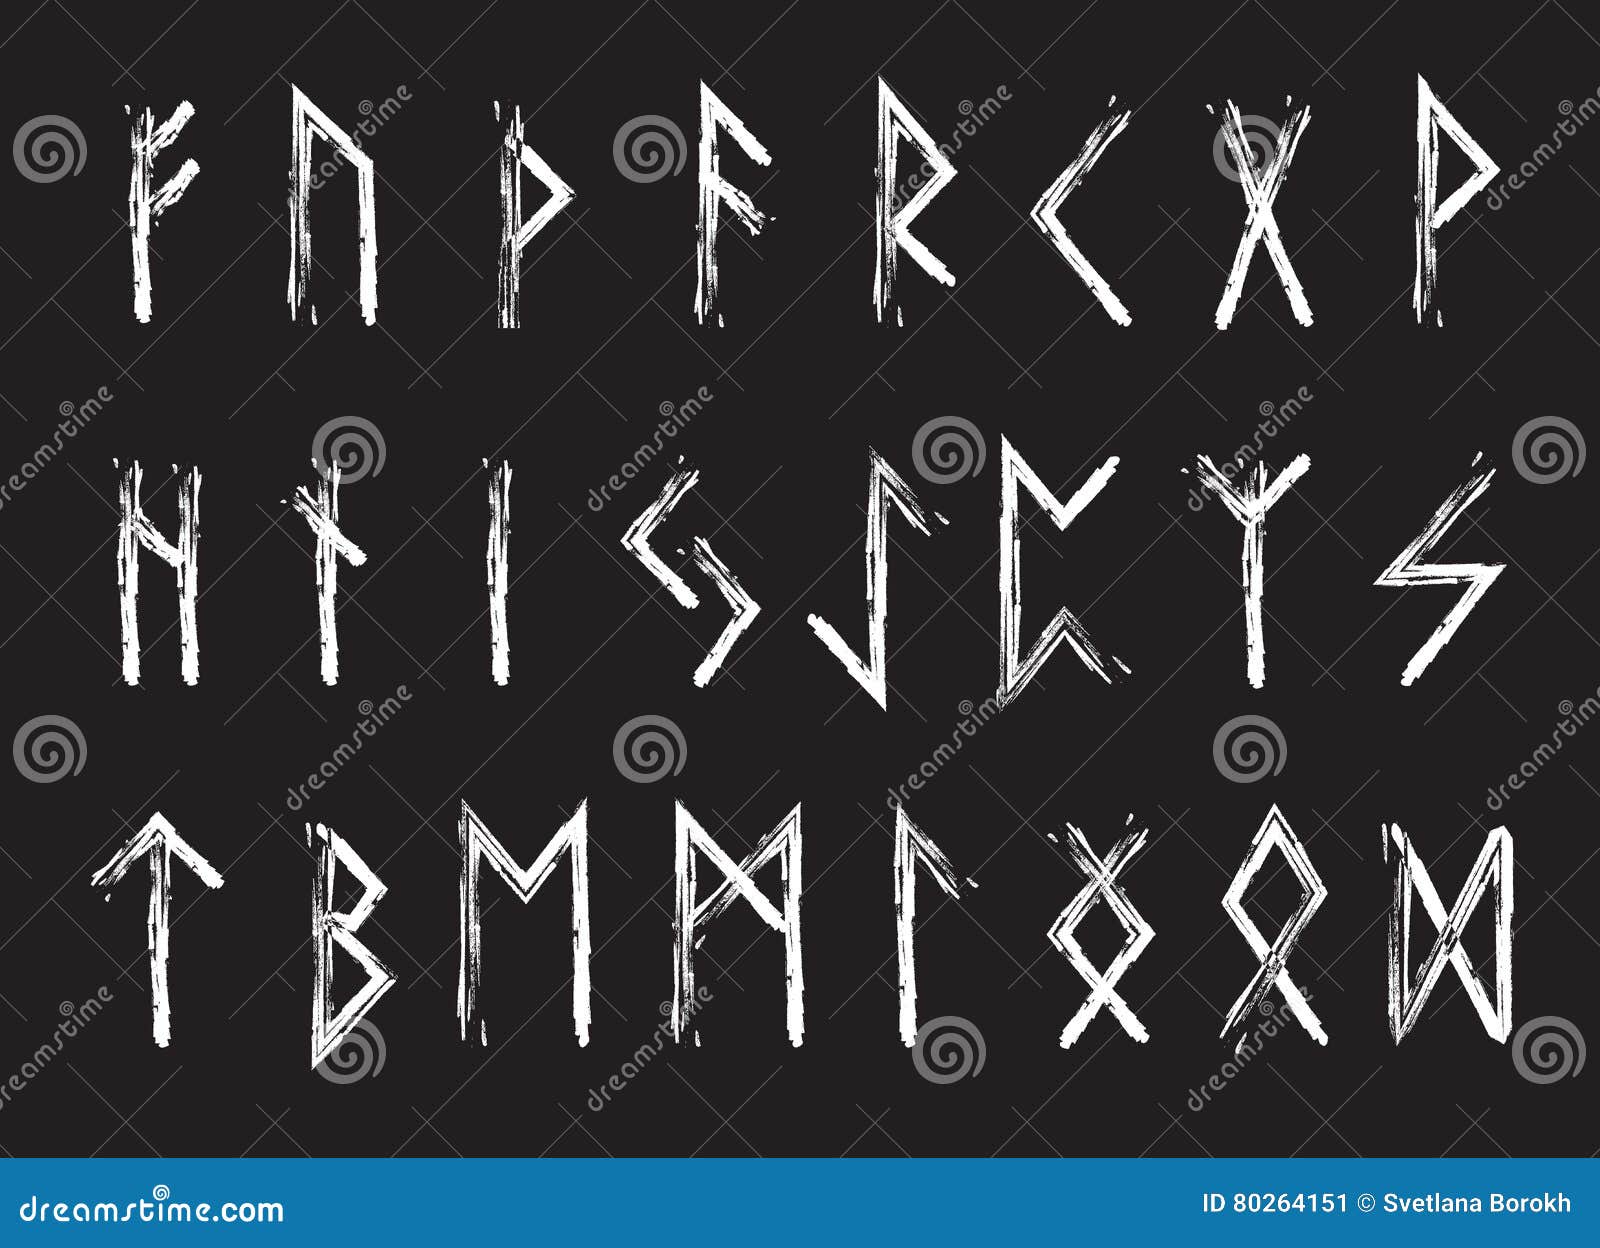 Ensemble De Rune De Lettres Alphabet De Runes Alphabet Runique